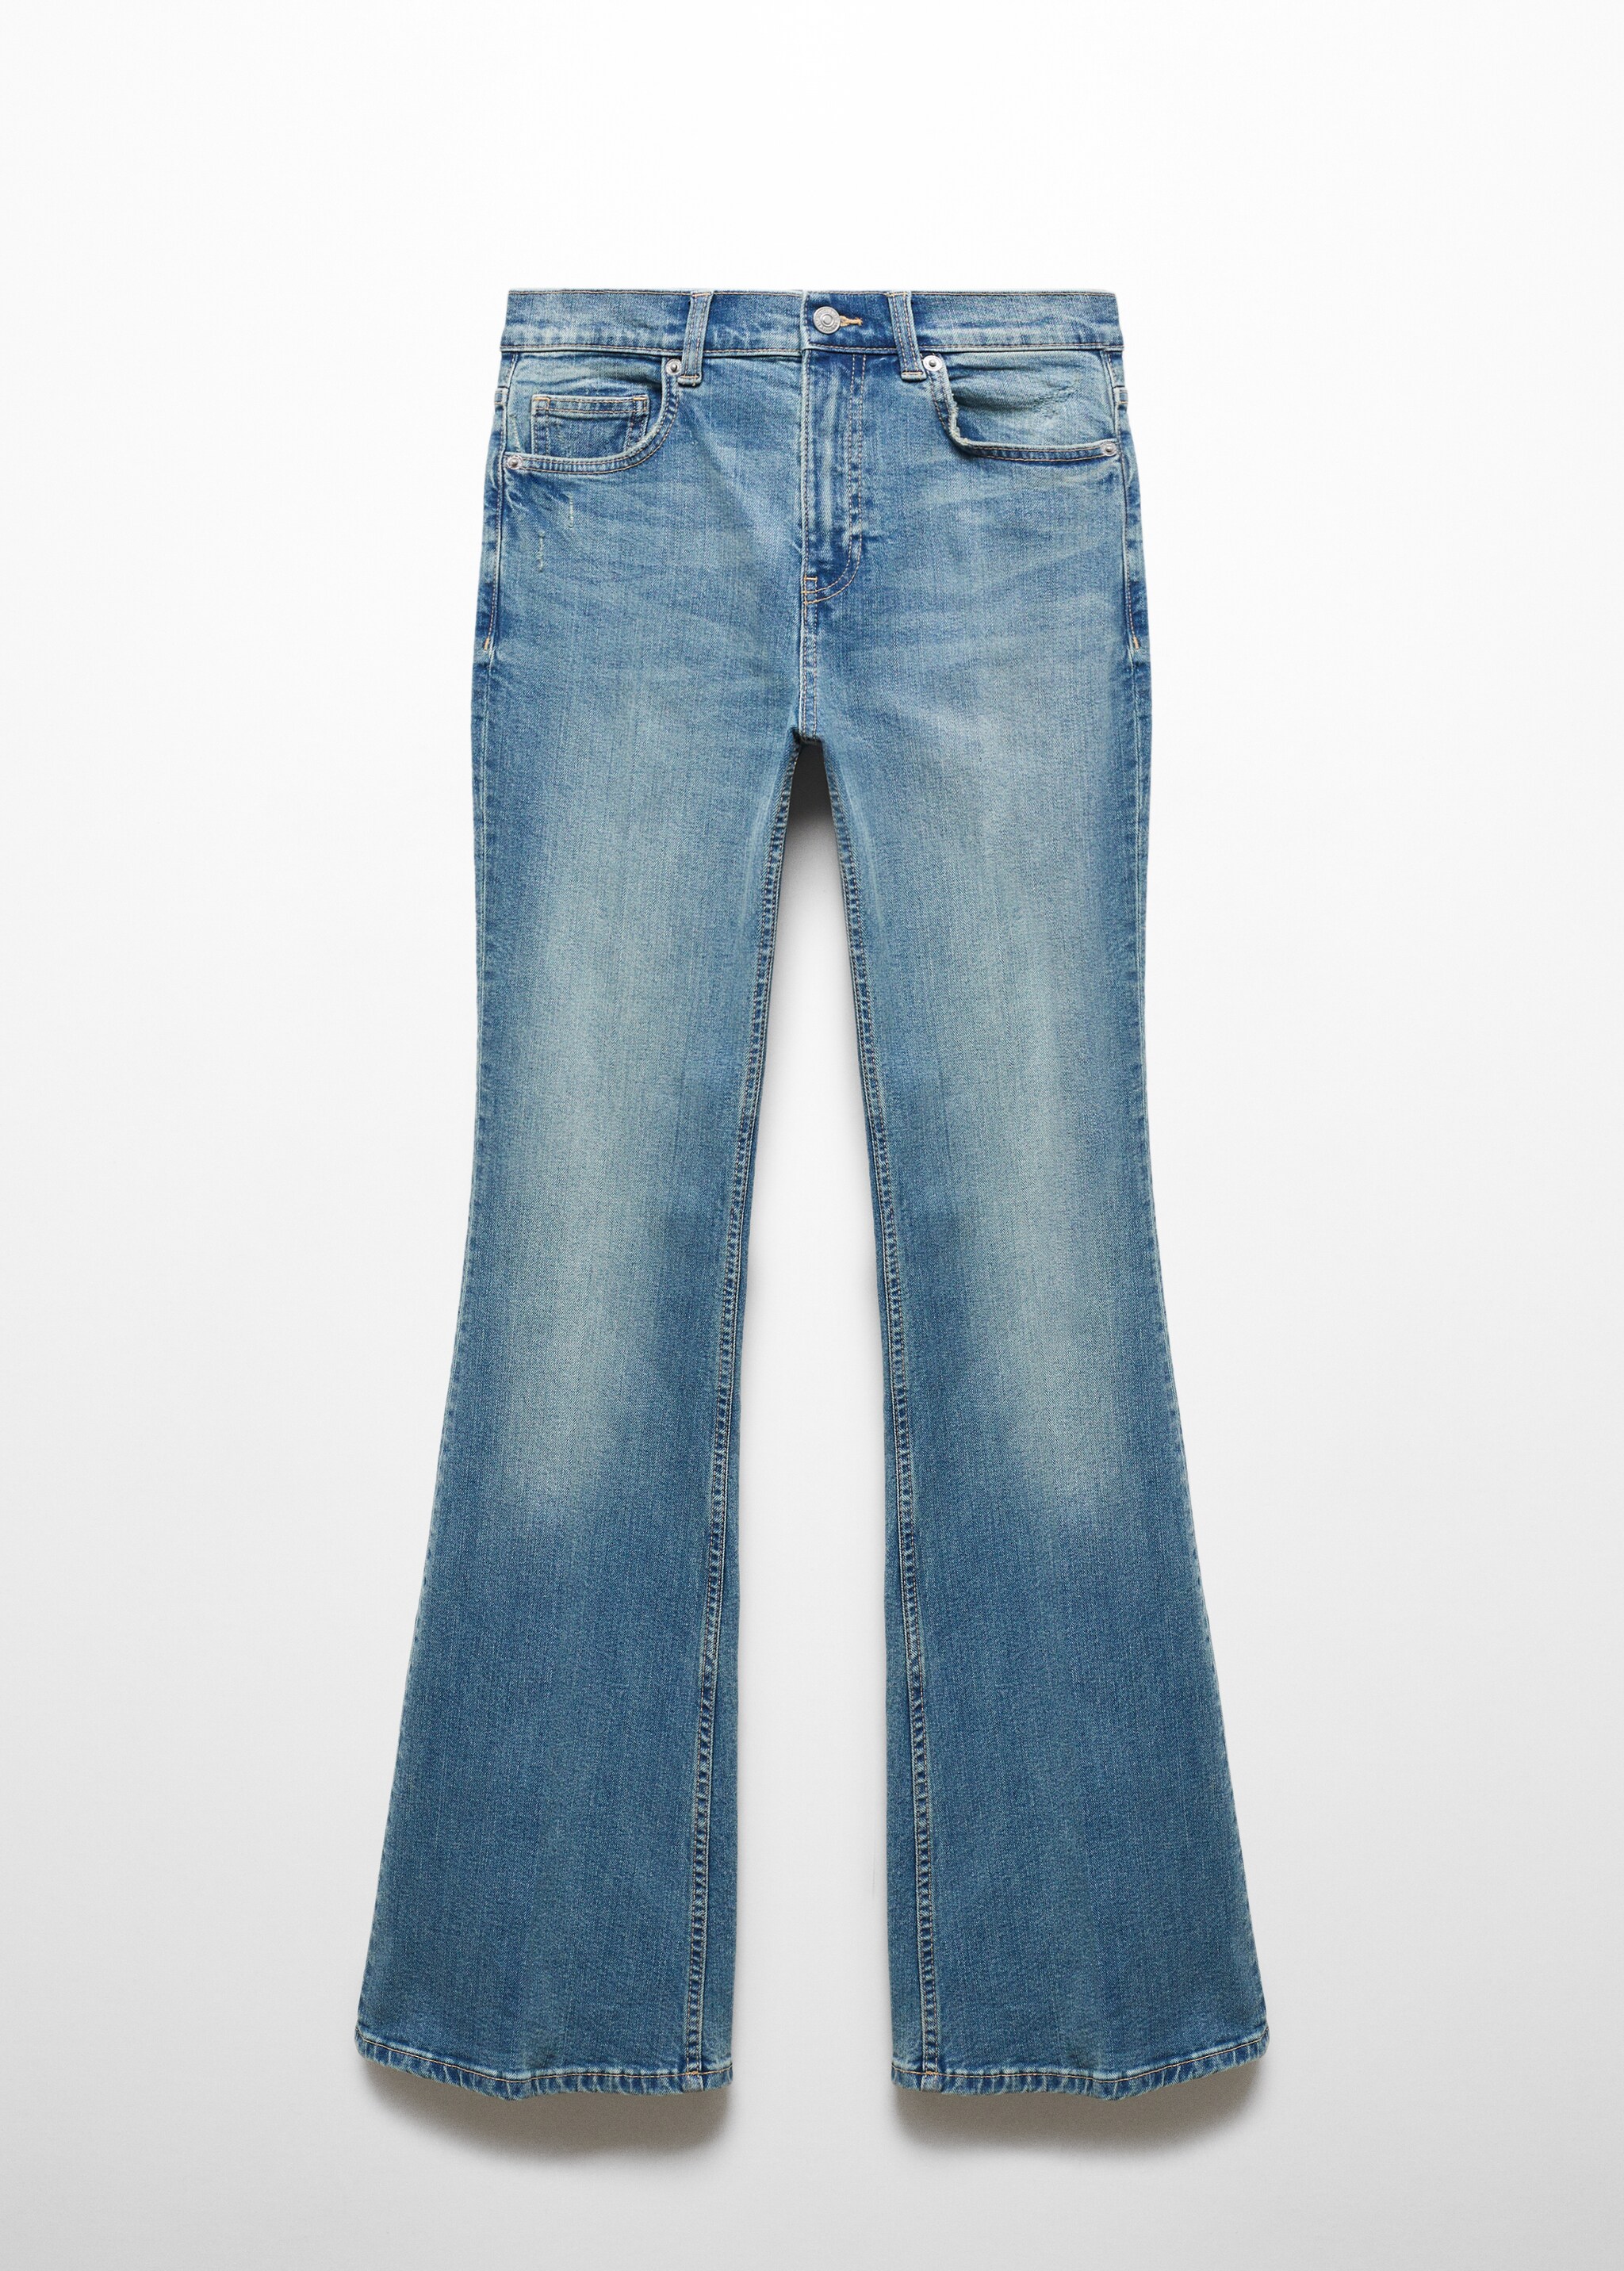 Jeans flare tiro alto - Artículo sin modelo